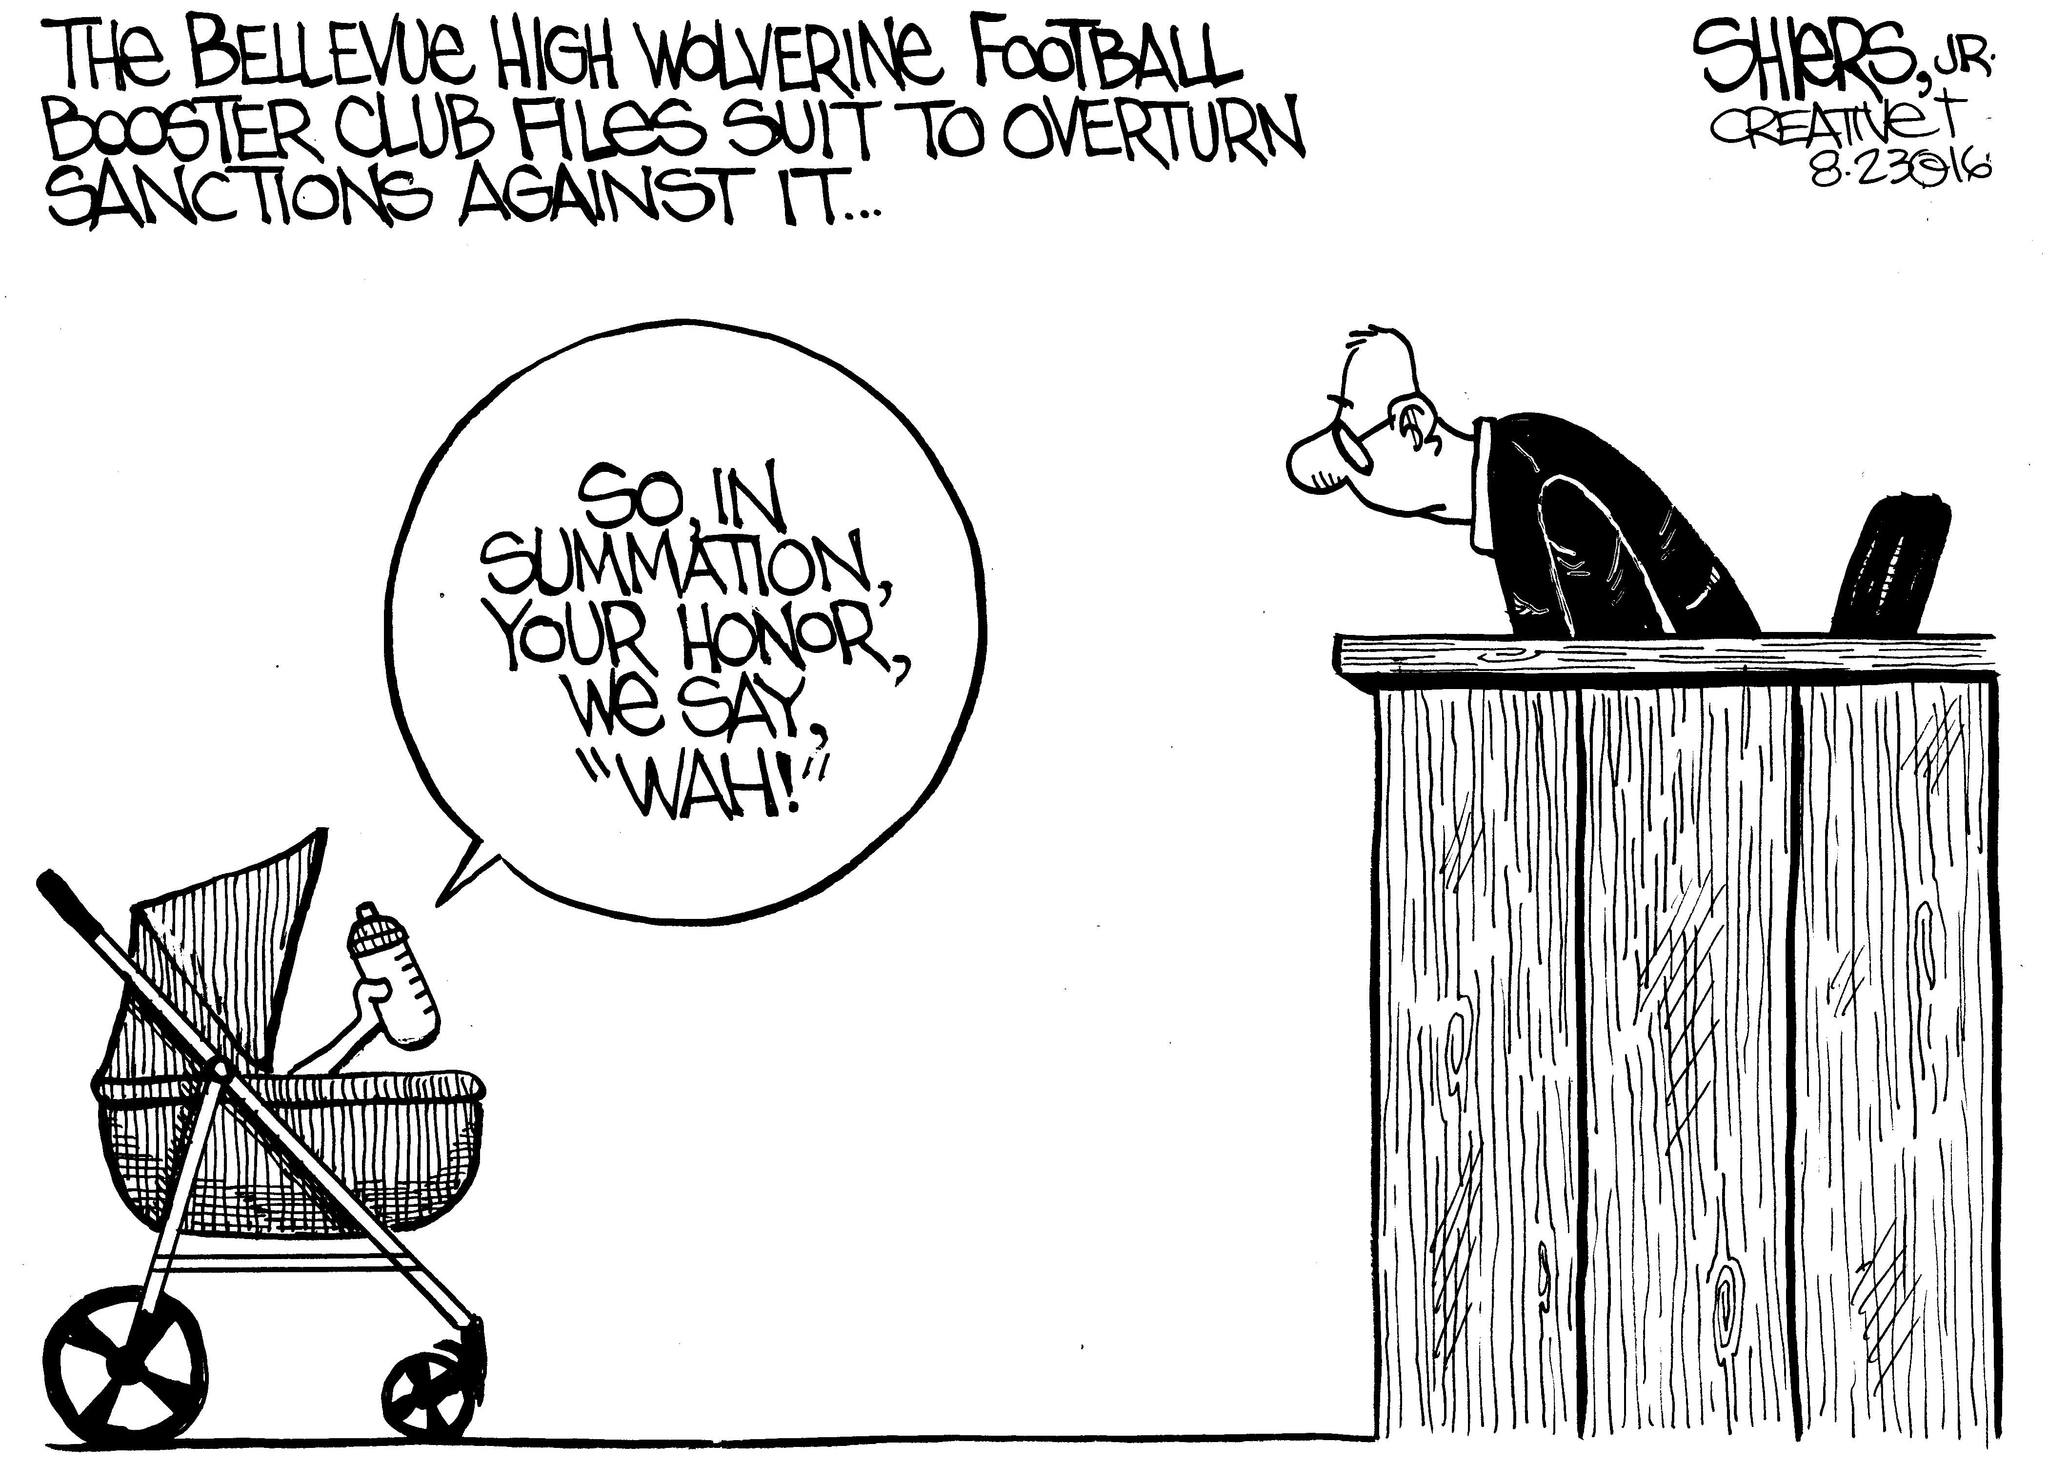 Bellevue football booster club files suit | Cartoon